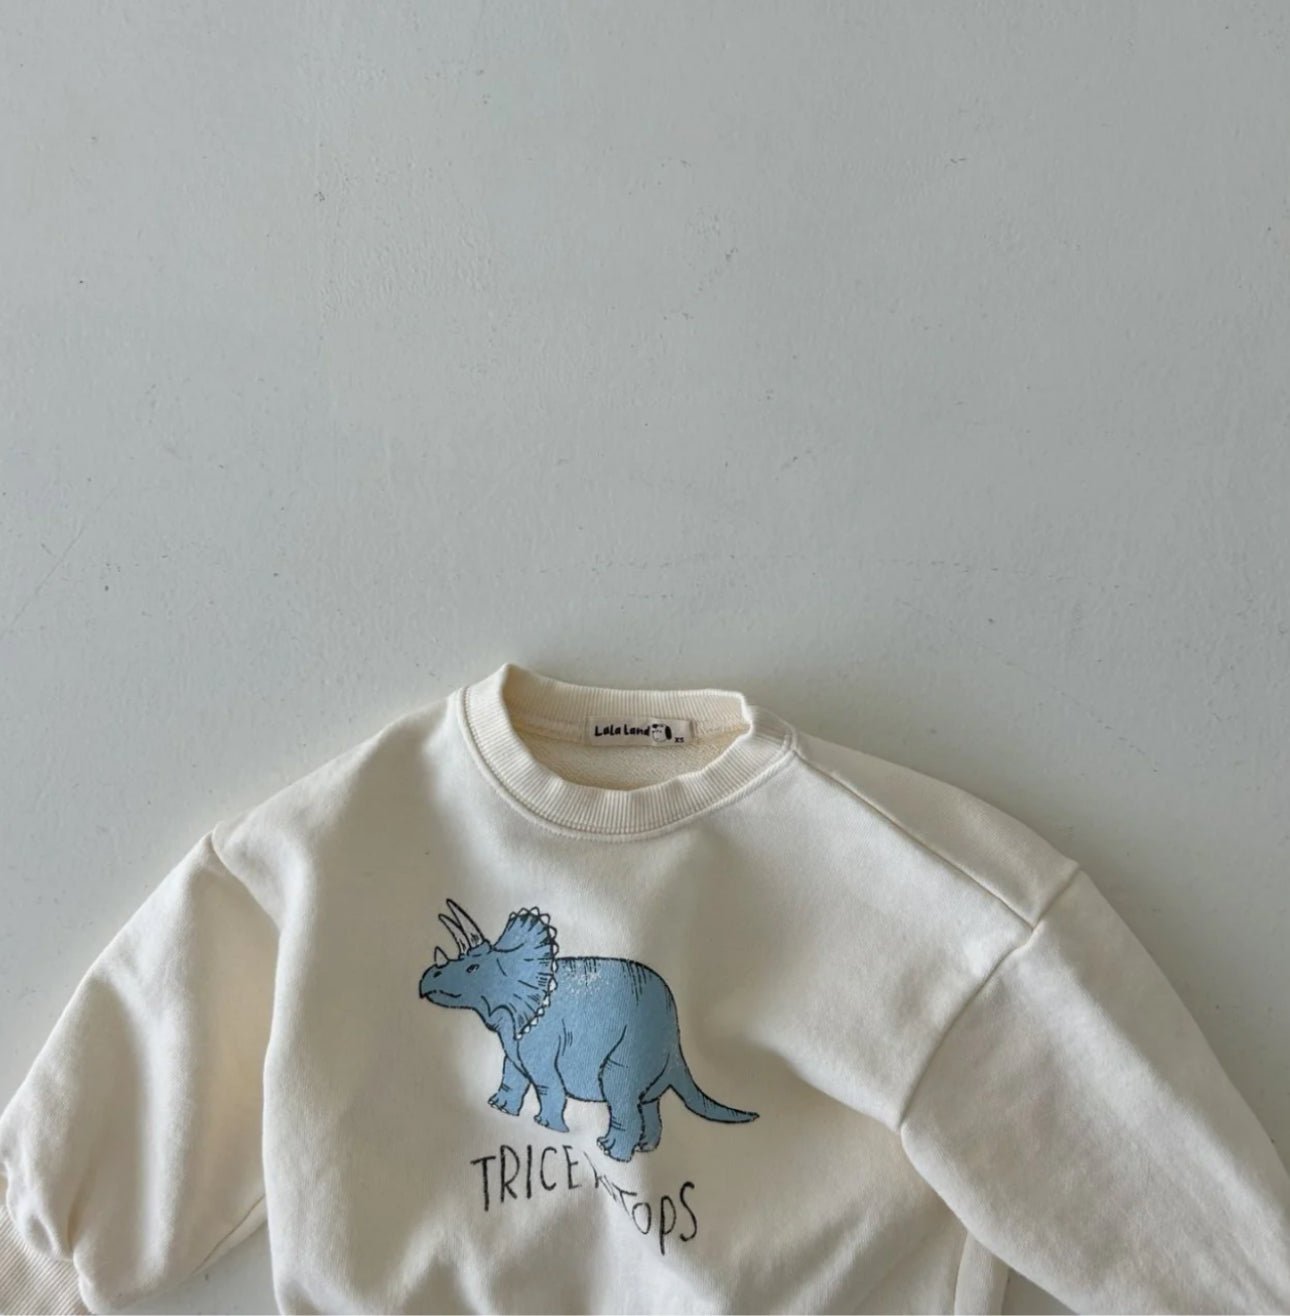 Dinosaur Sweatshirt find Stylish Fashion for Little People- at Little Foxx Concept Store